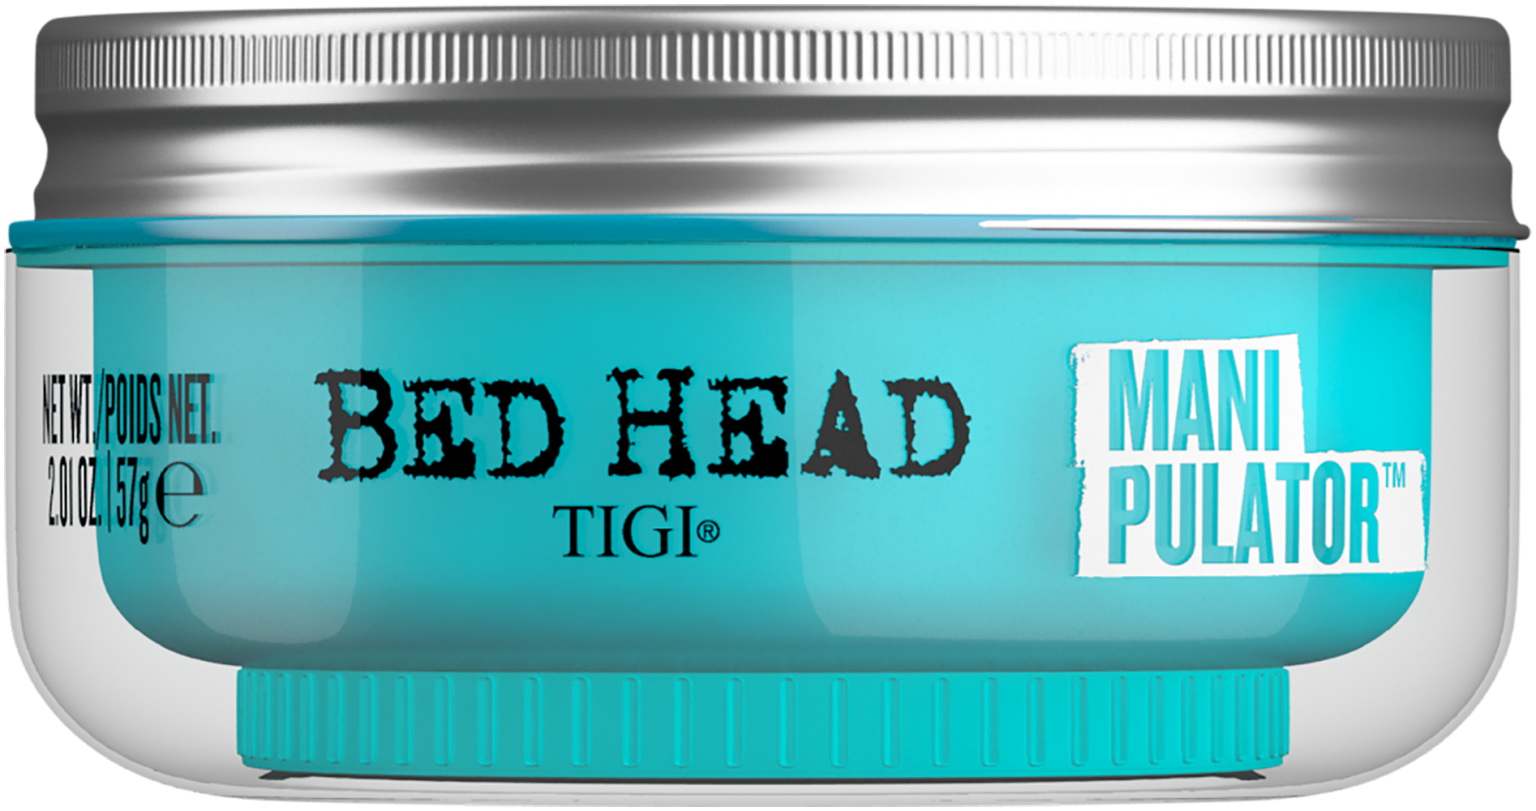 Bedhead Manipulator from TIGI